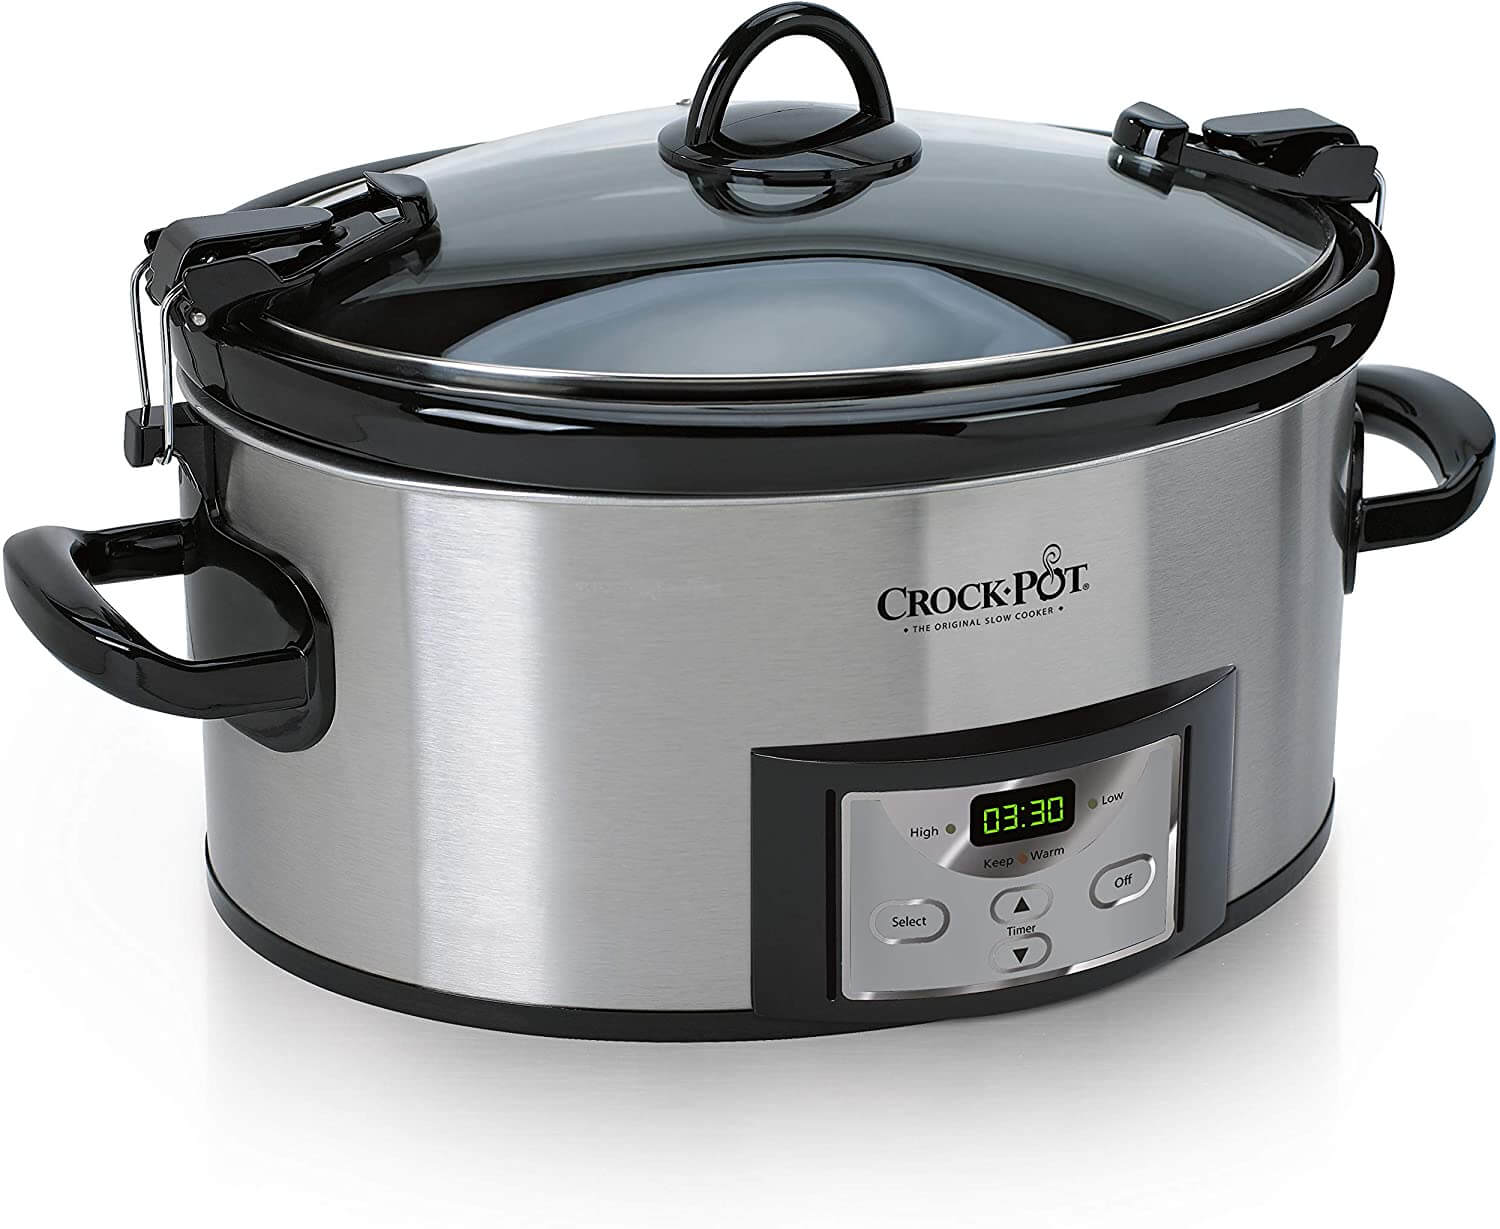 Crockpot brand slow cooker